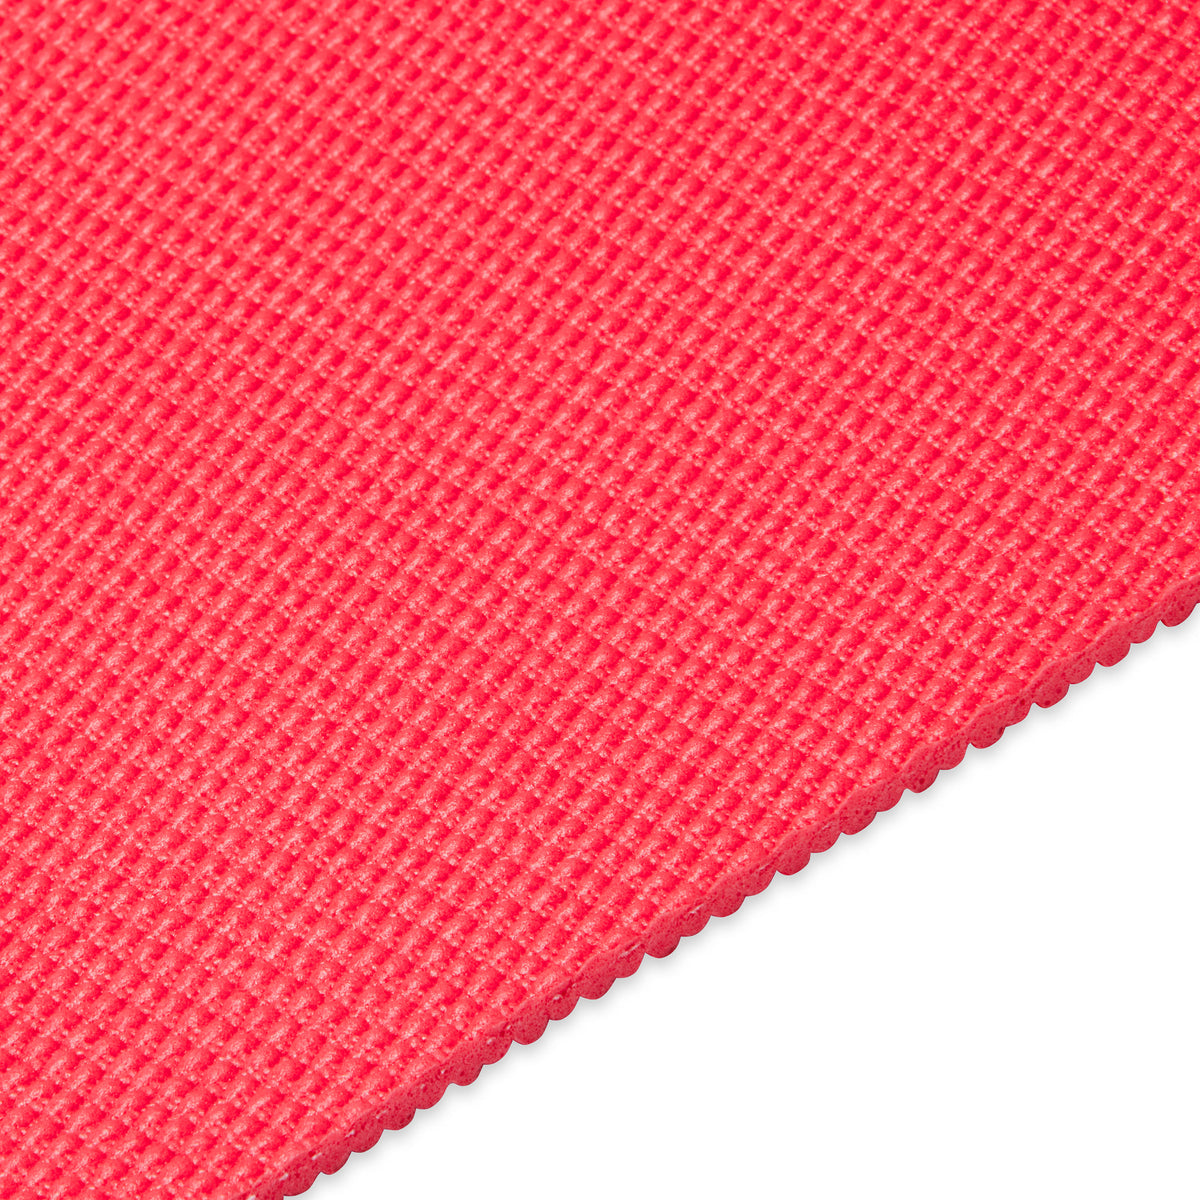 Reebok Solid Yoga Mat (5mm) Cherry closeup